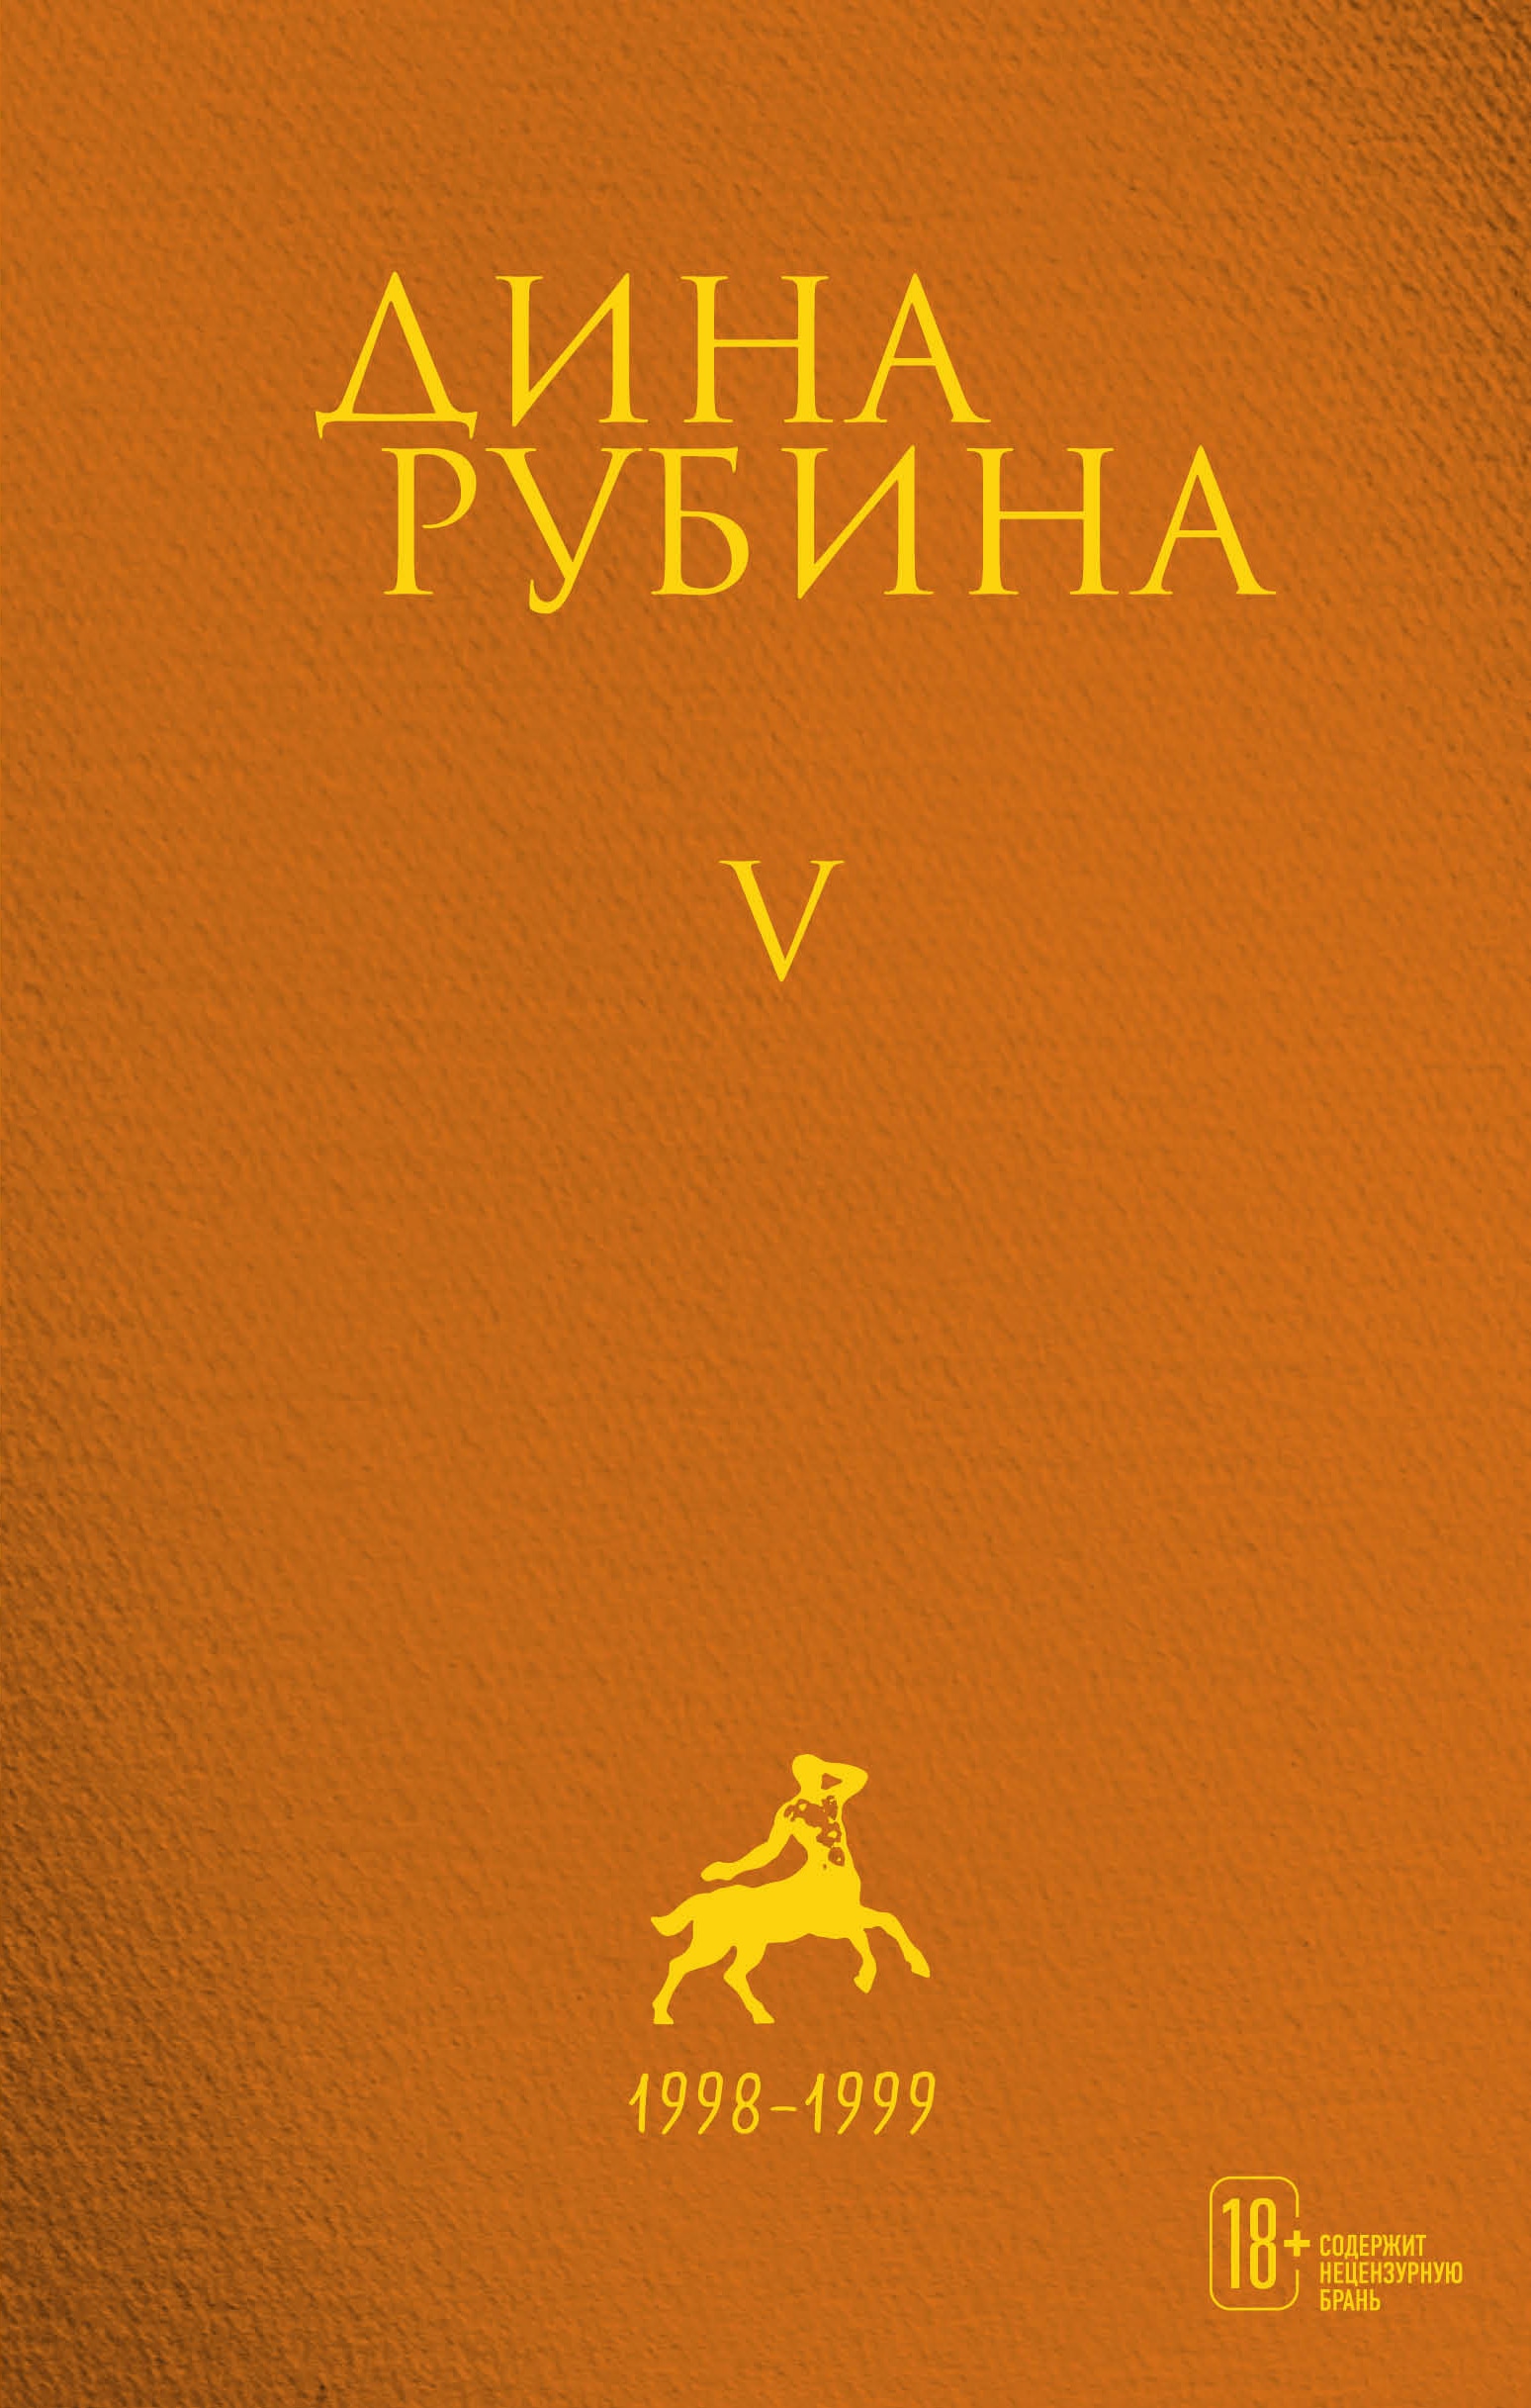 Book “Том 5” by Дина Рубина — July 8, 2021